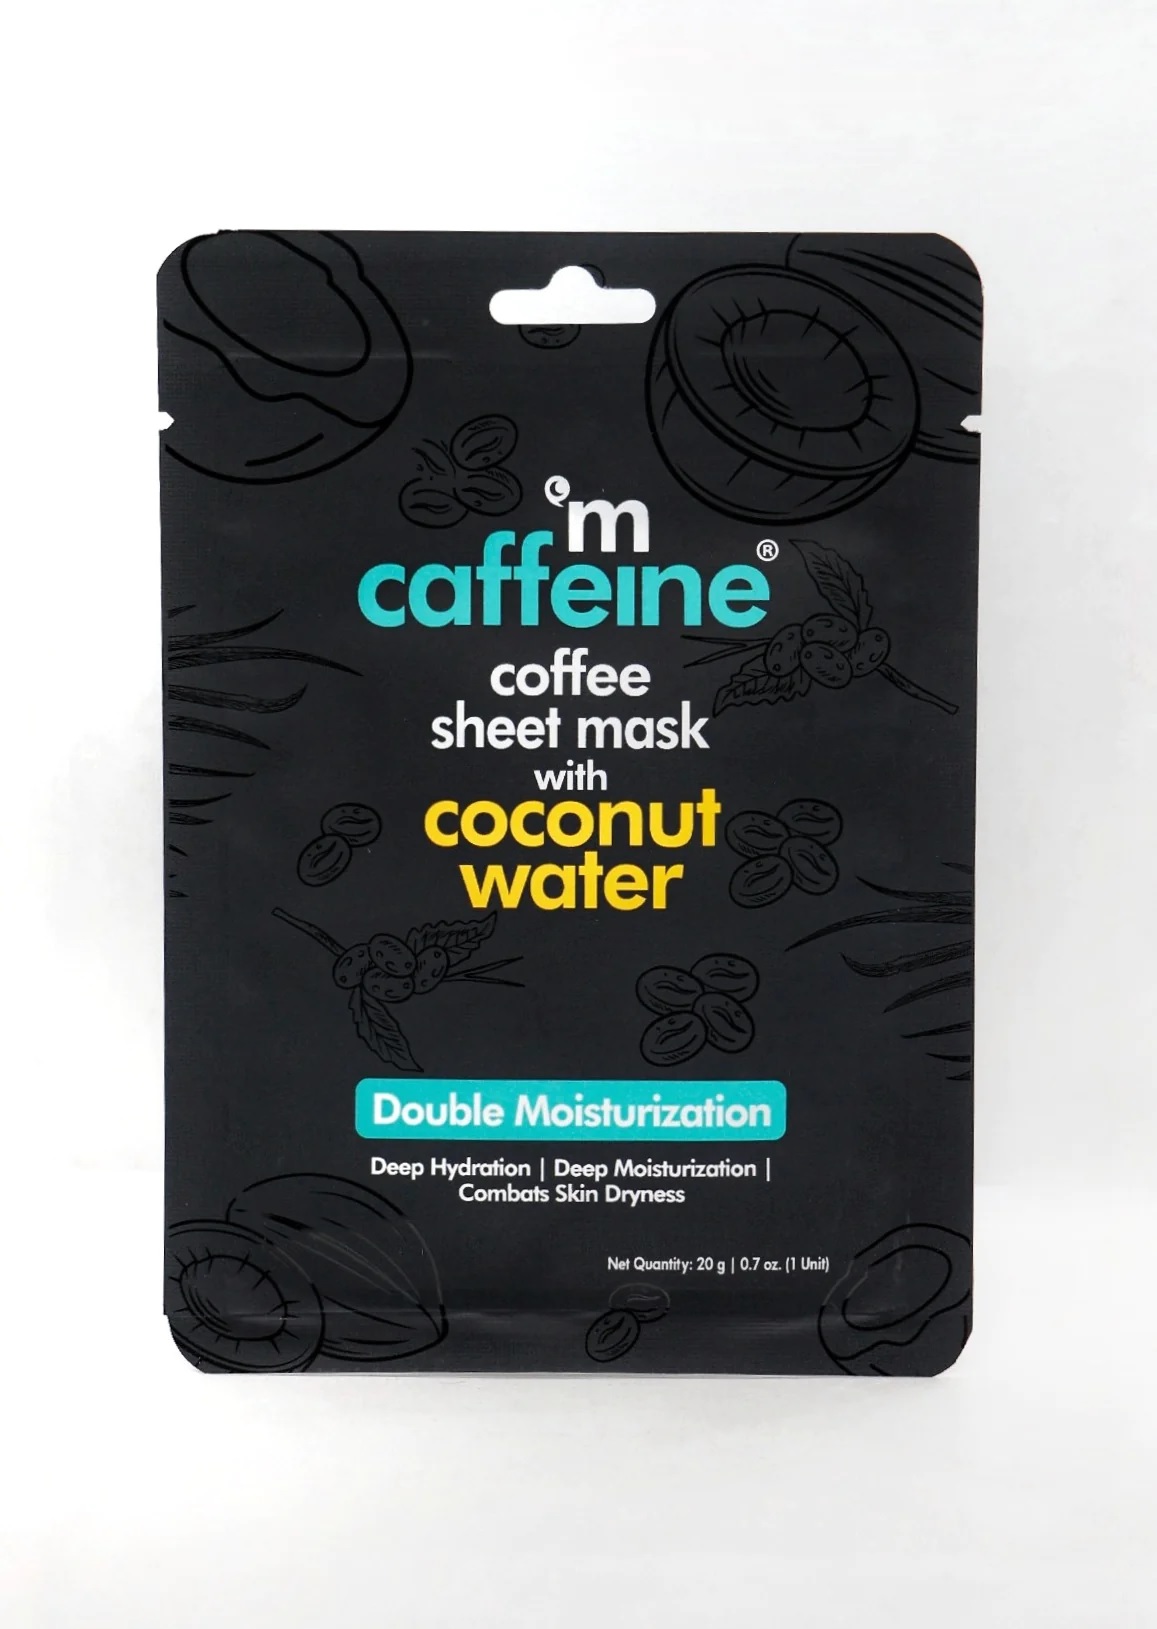 MCaffeine Coconut Water Coffee Sheet Mask For Double Moisturization